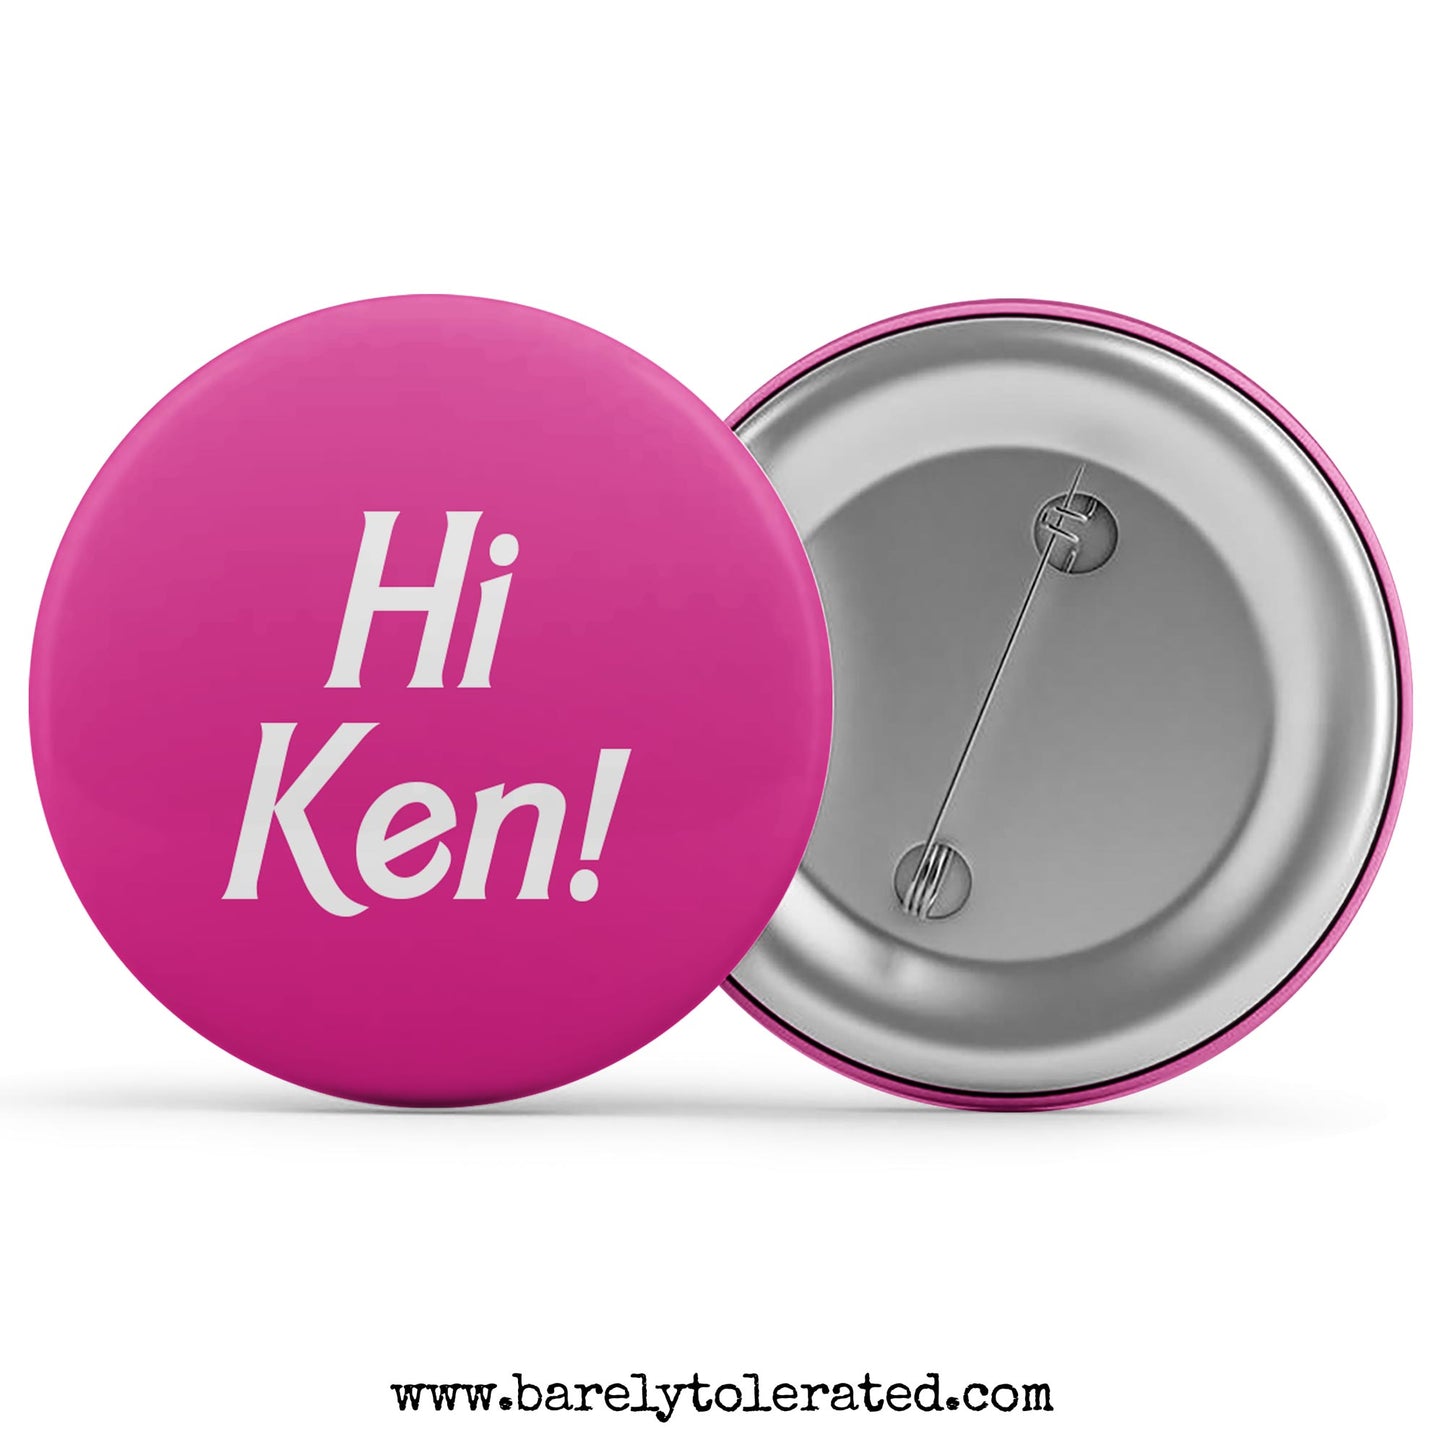 Hi Ken